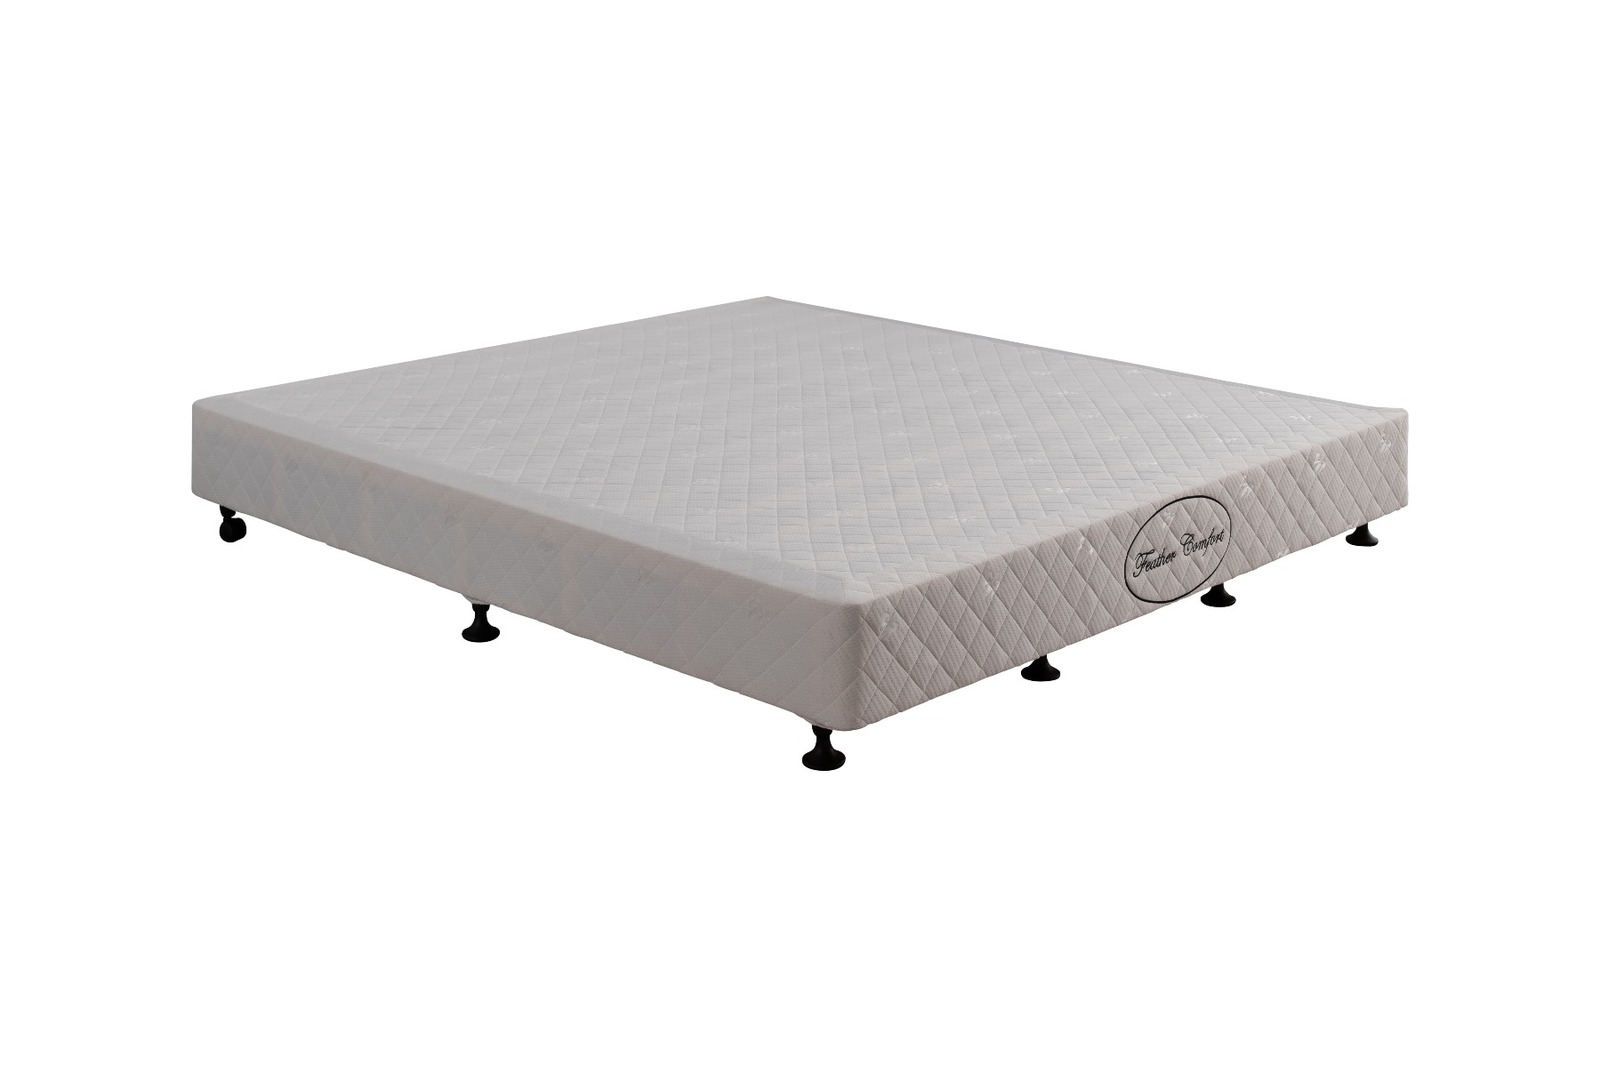 base for queen sise mattress